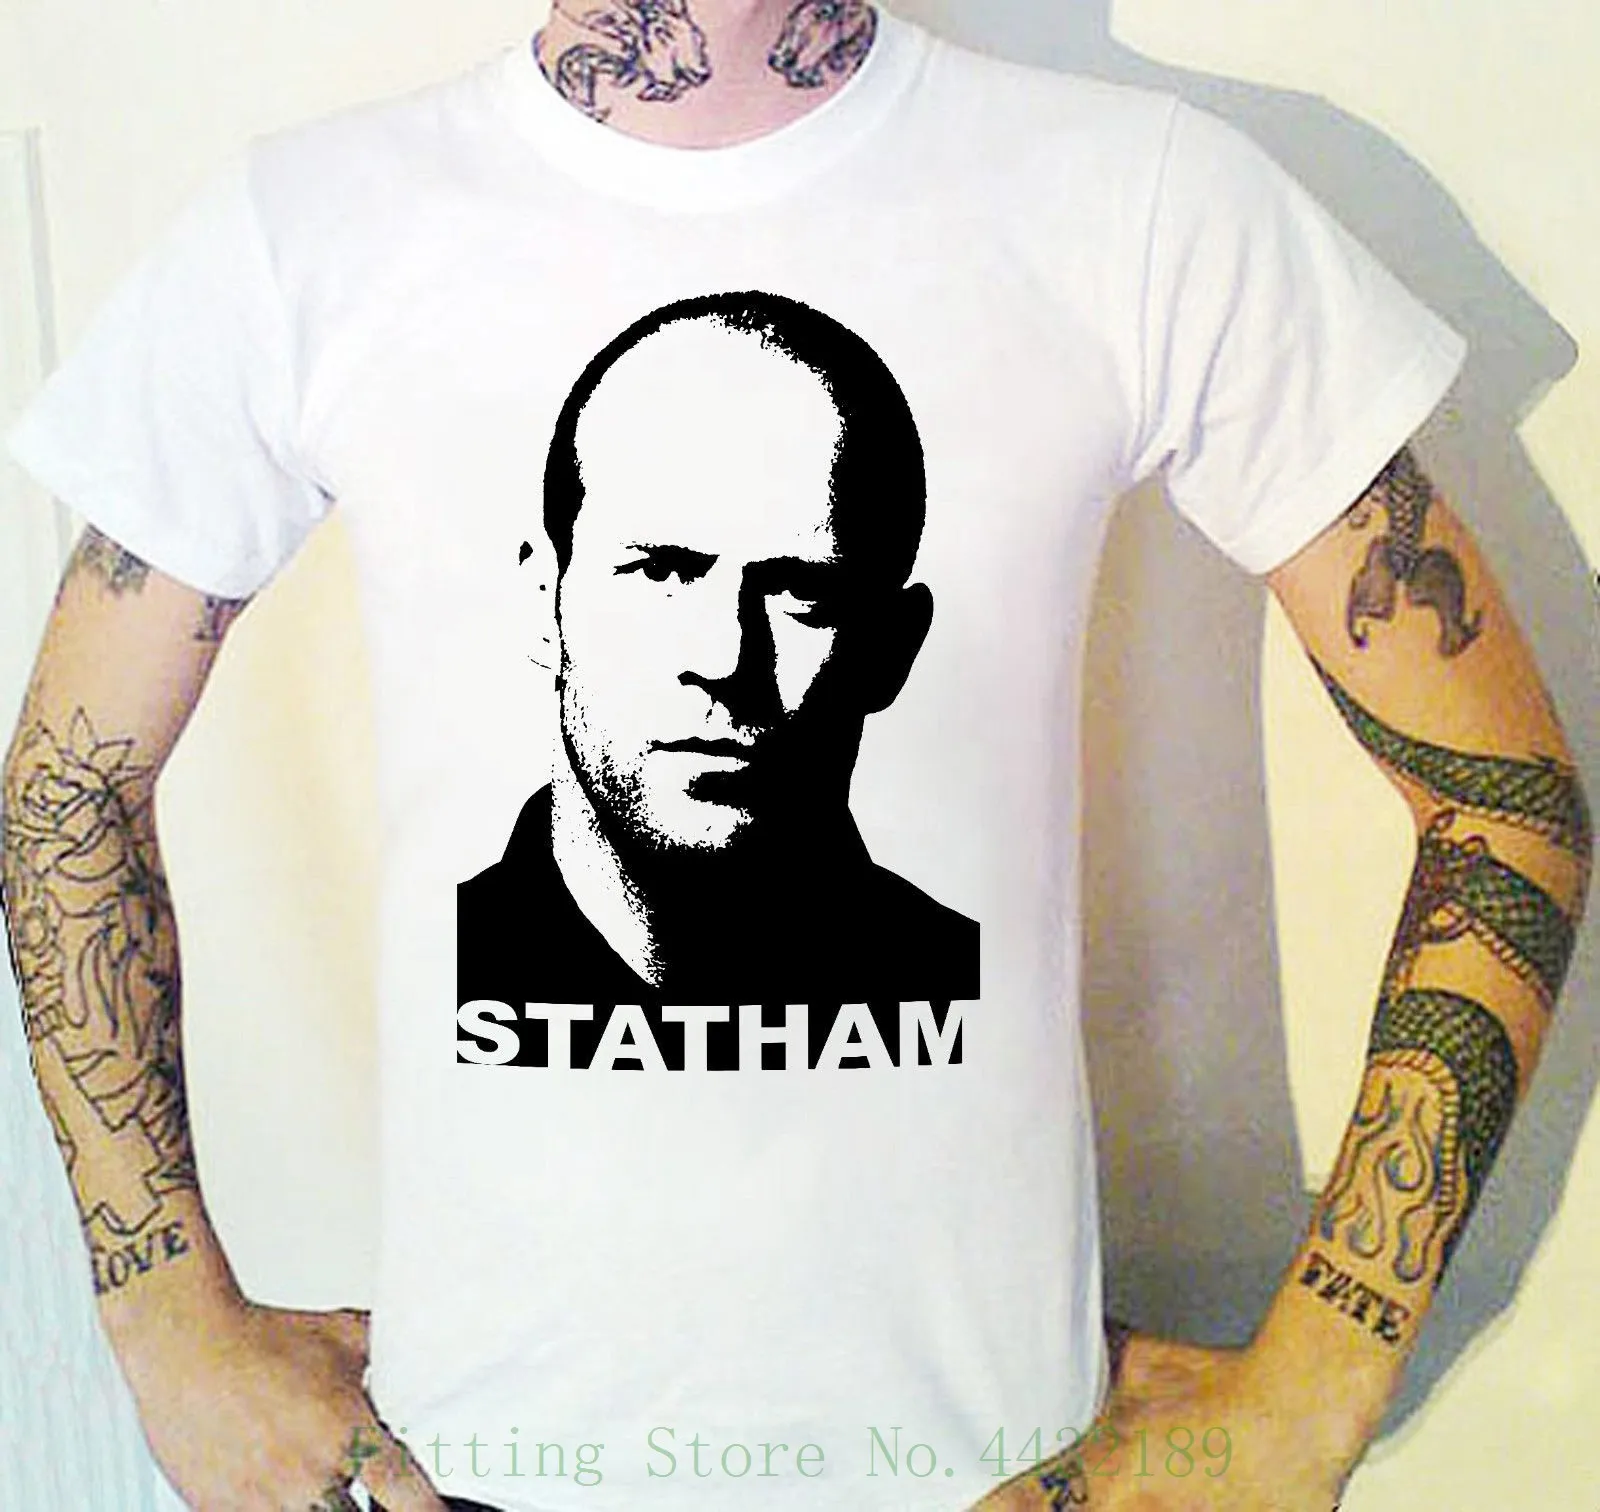 A tribute to Jason Statham T-Shirt.